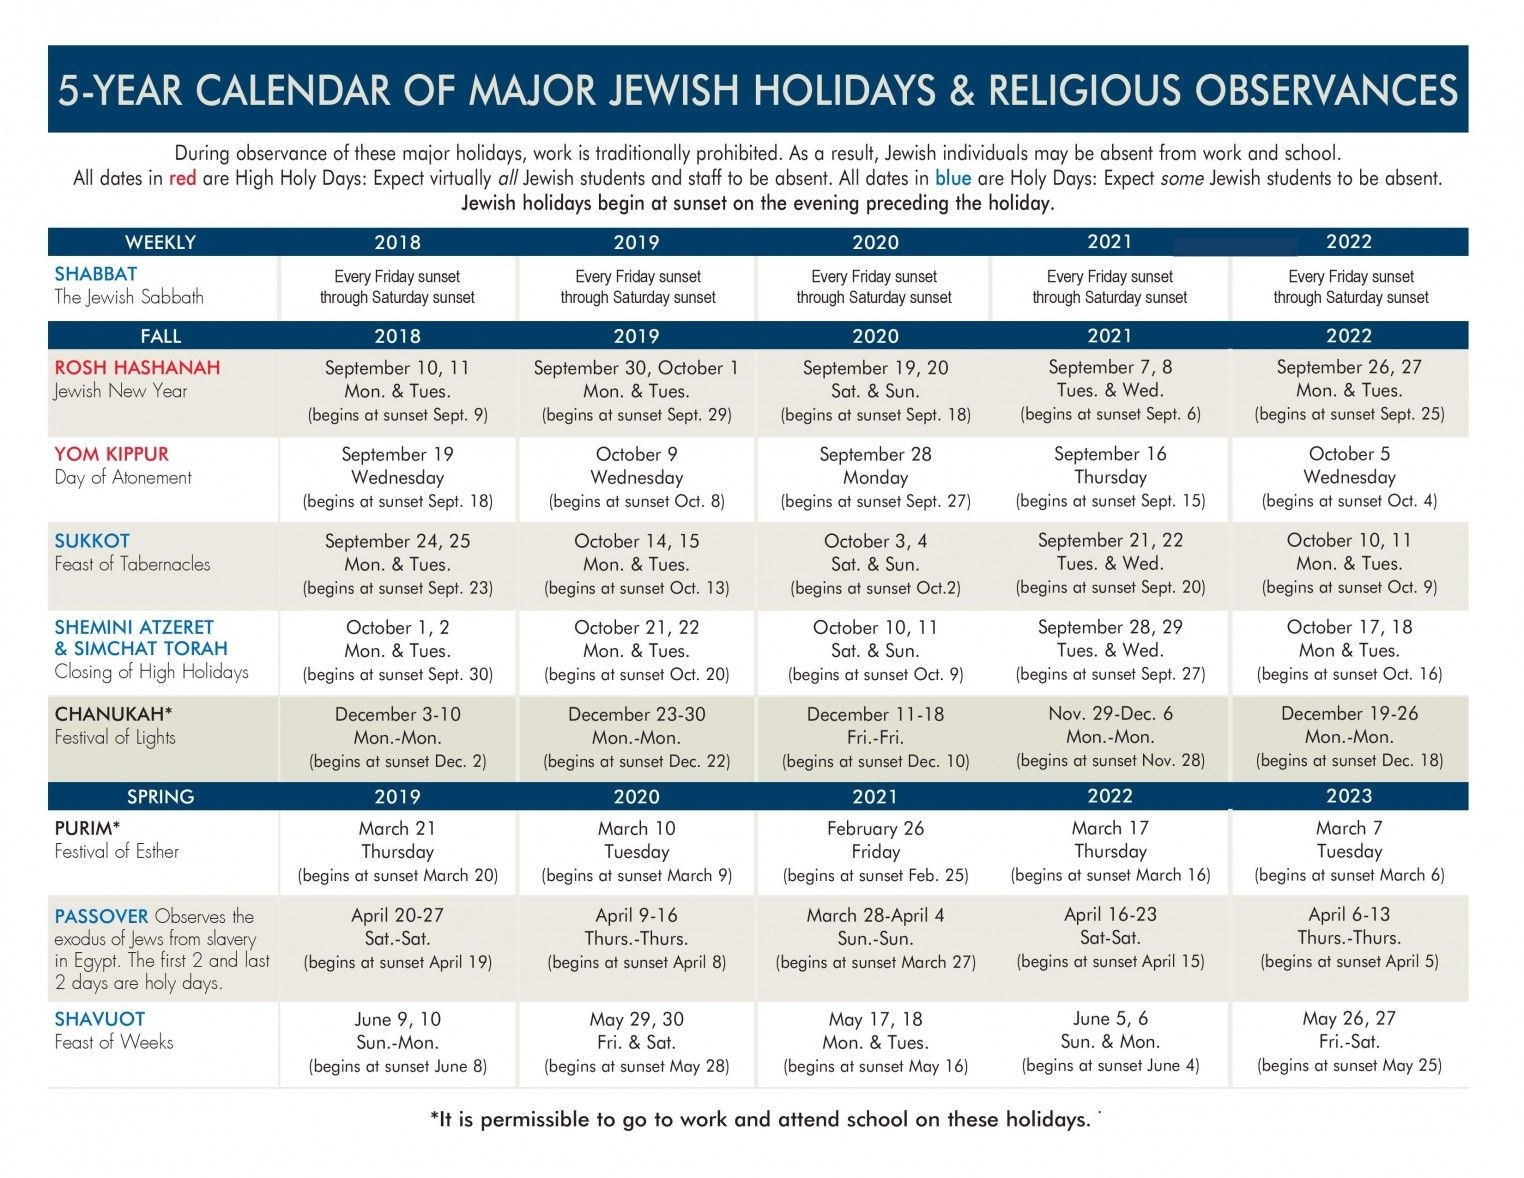 5-Year Jewish Holiday Calendar | Jewish Federation Of